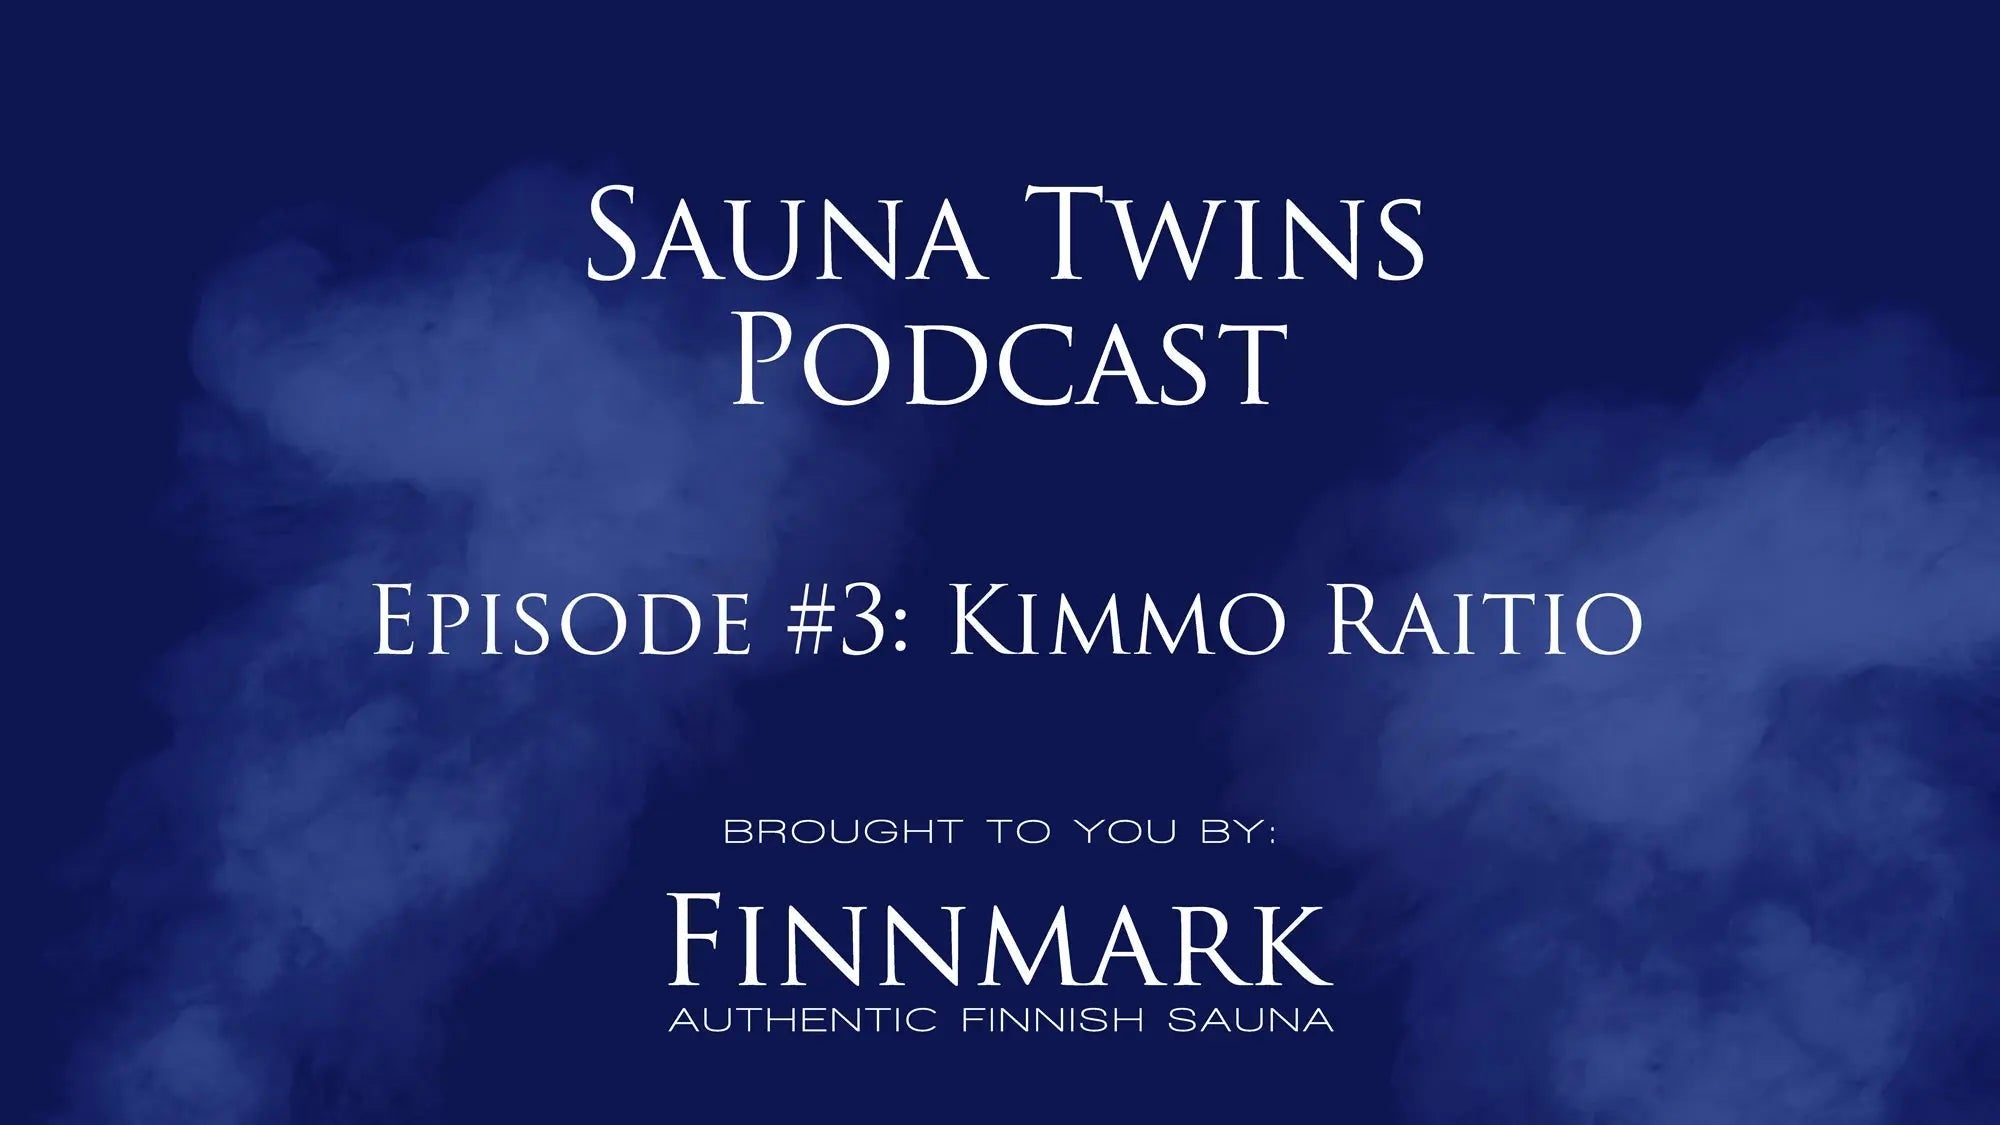 Sauna Twins Podcast - Episode #3 Kimmo Raitio | Finnmark Sauna - Finnmark Sauna